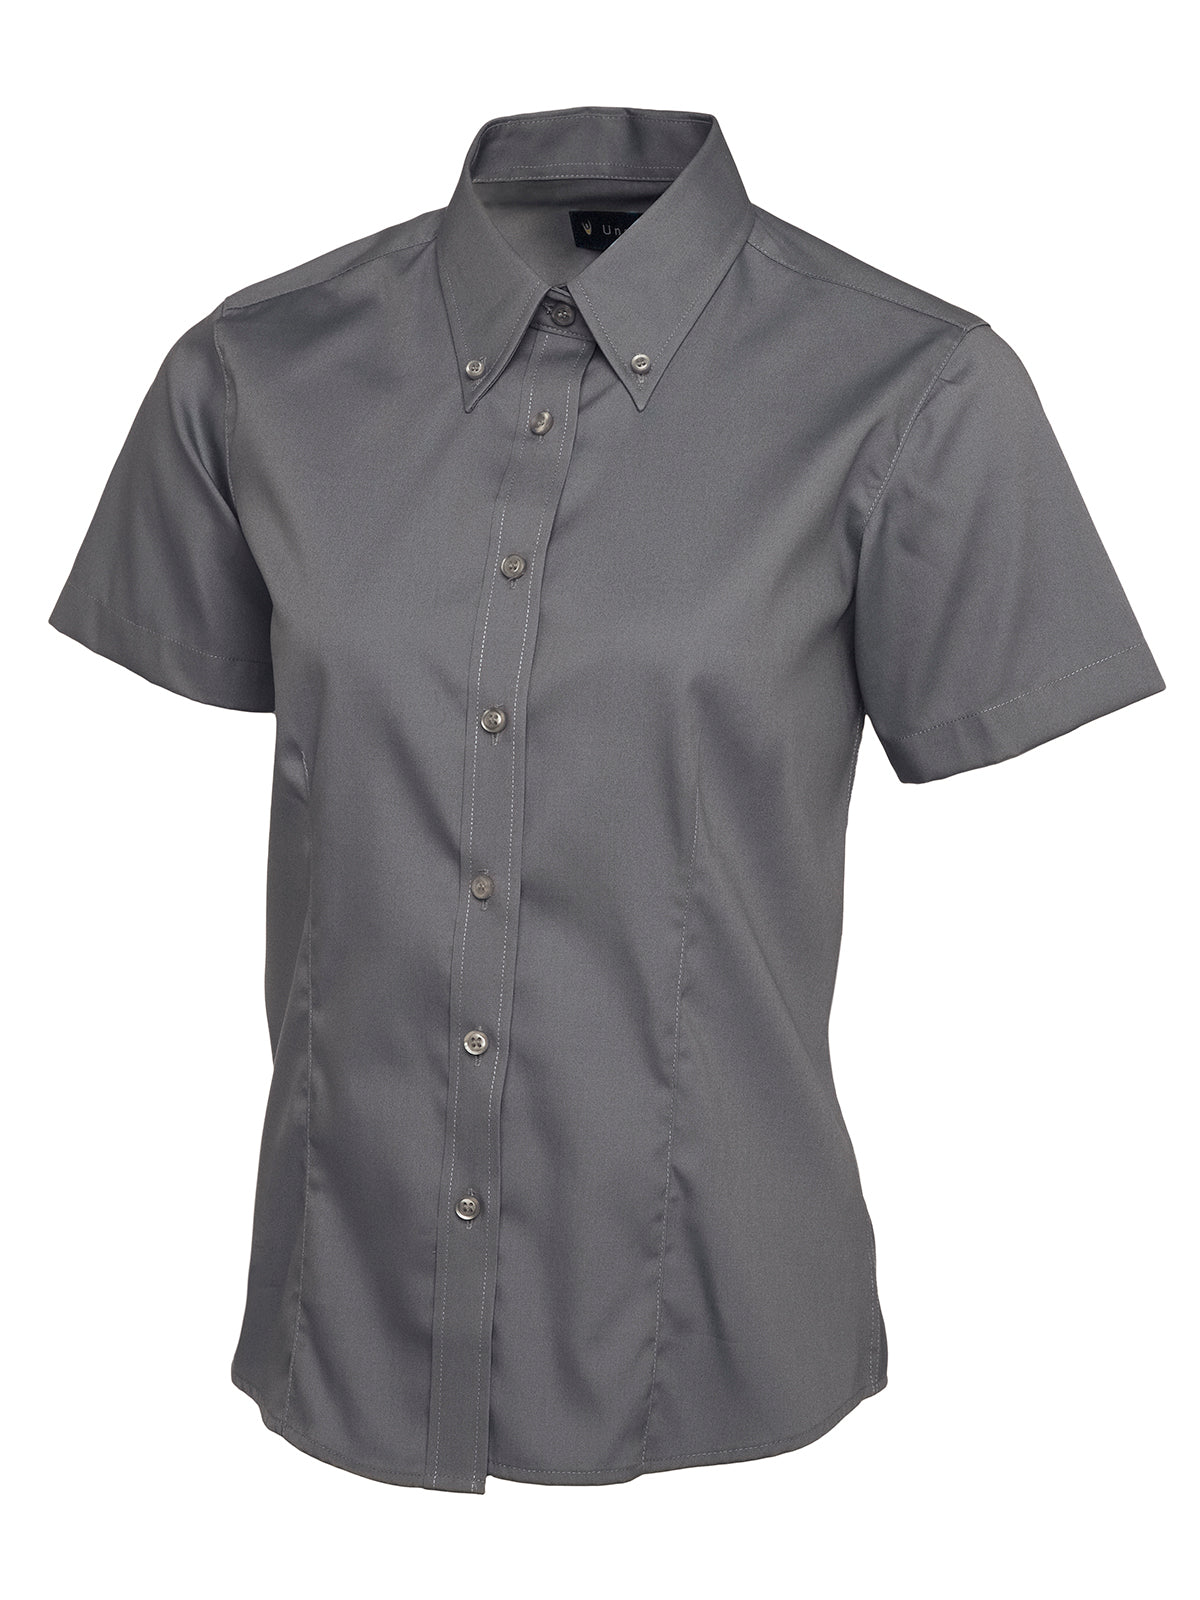 Uneek Ladies Pinpoint Oxford Half Sleeve Shirt UC704 - Charcoal